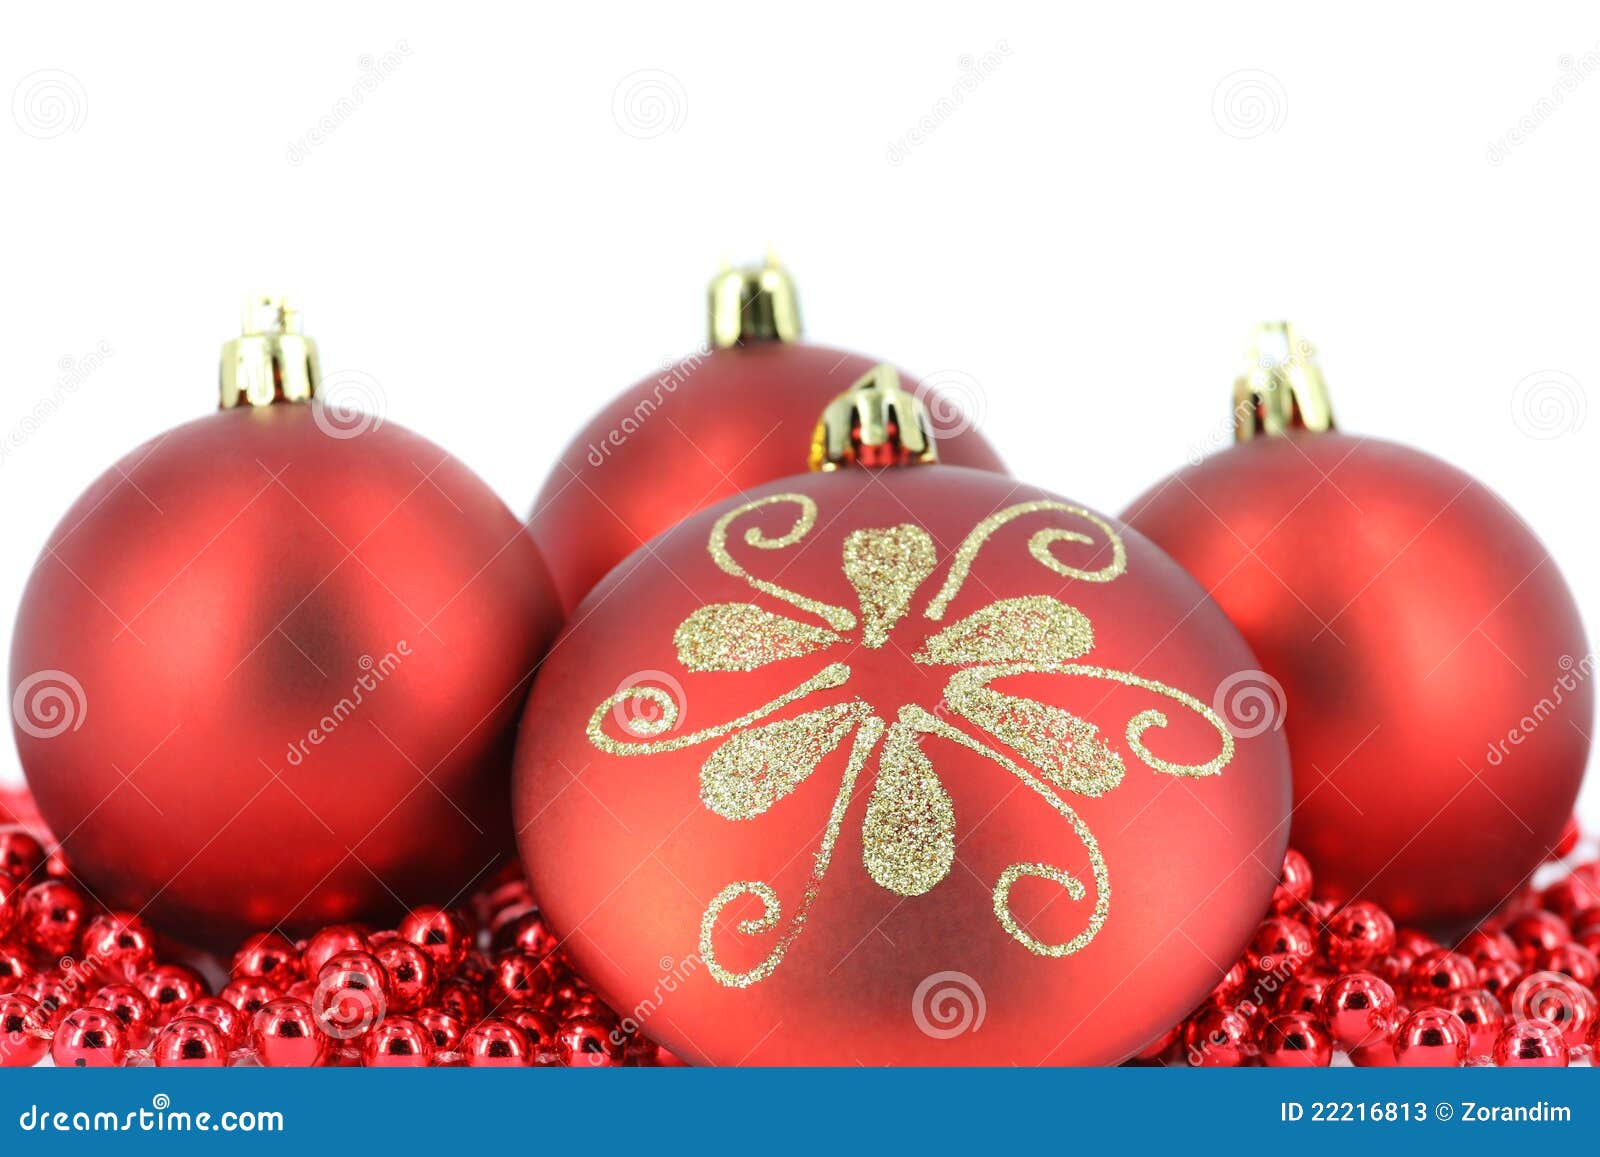 Merry Christmas Ball Decoration Stock Image - Image of background ...